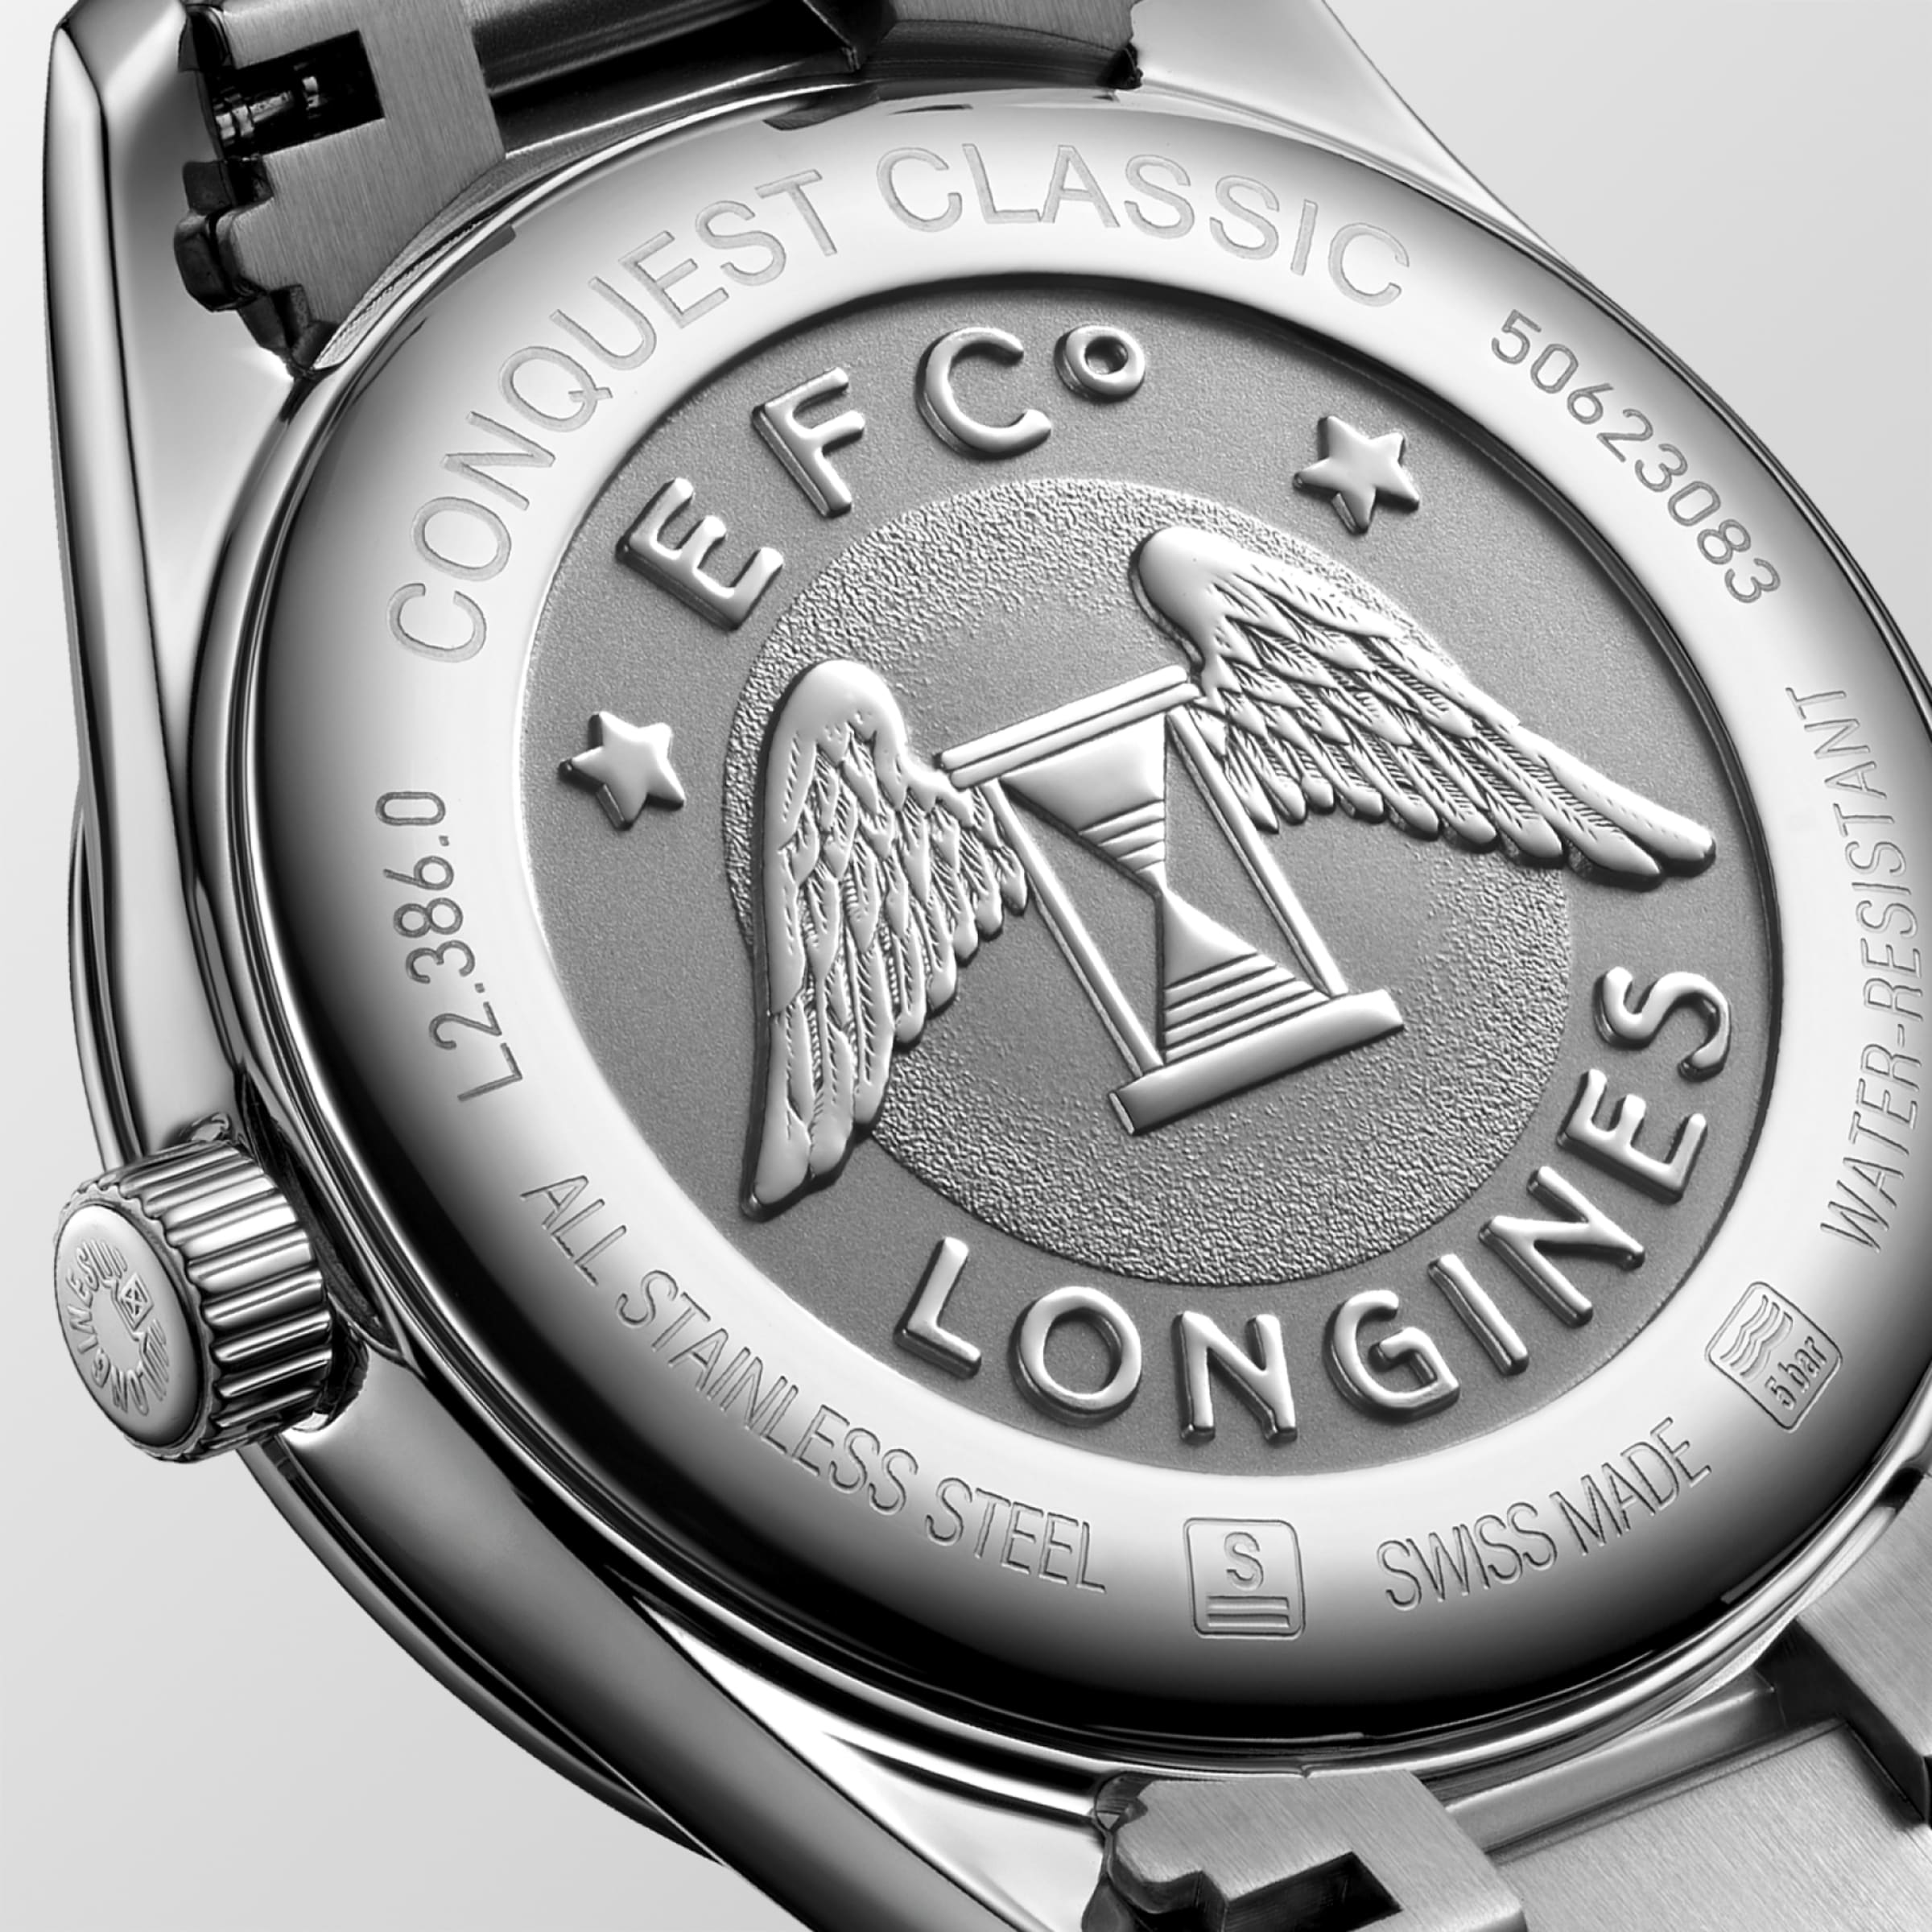 Longines CONQUEST CLASSIC Quartz Stainless steel Watch - L2.386.0.72.6